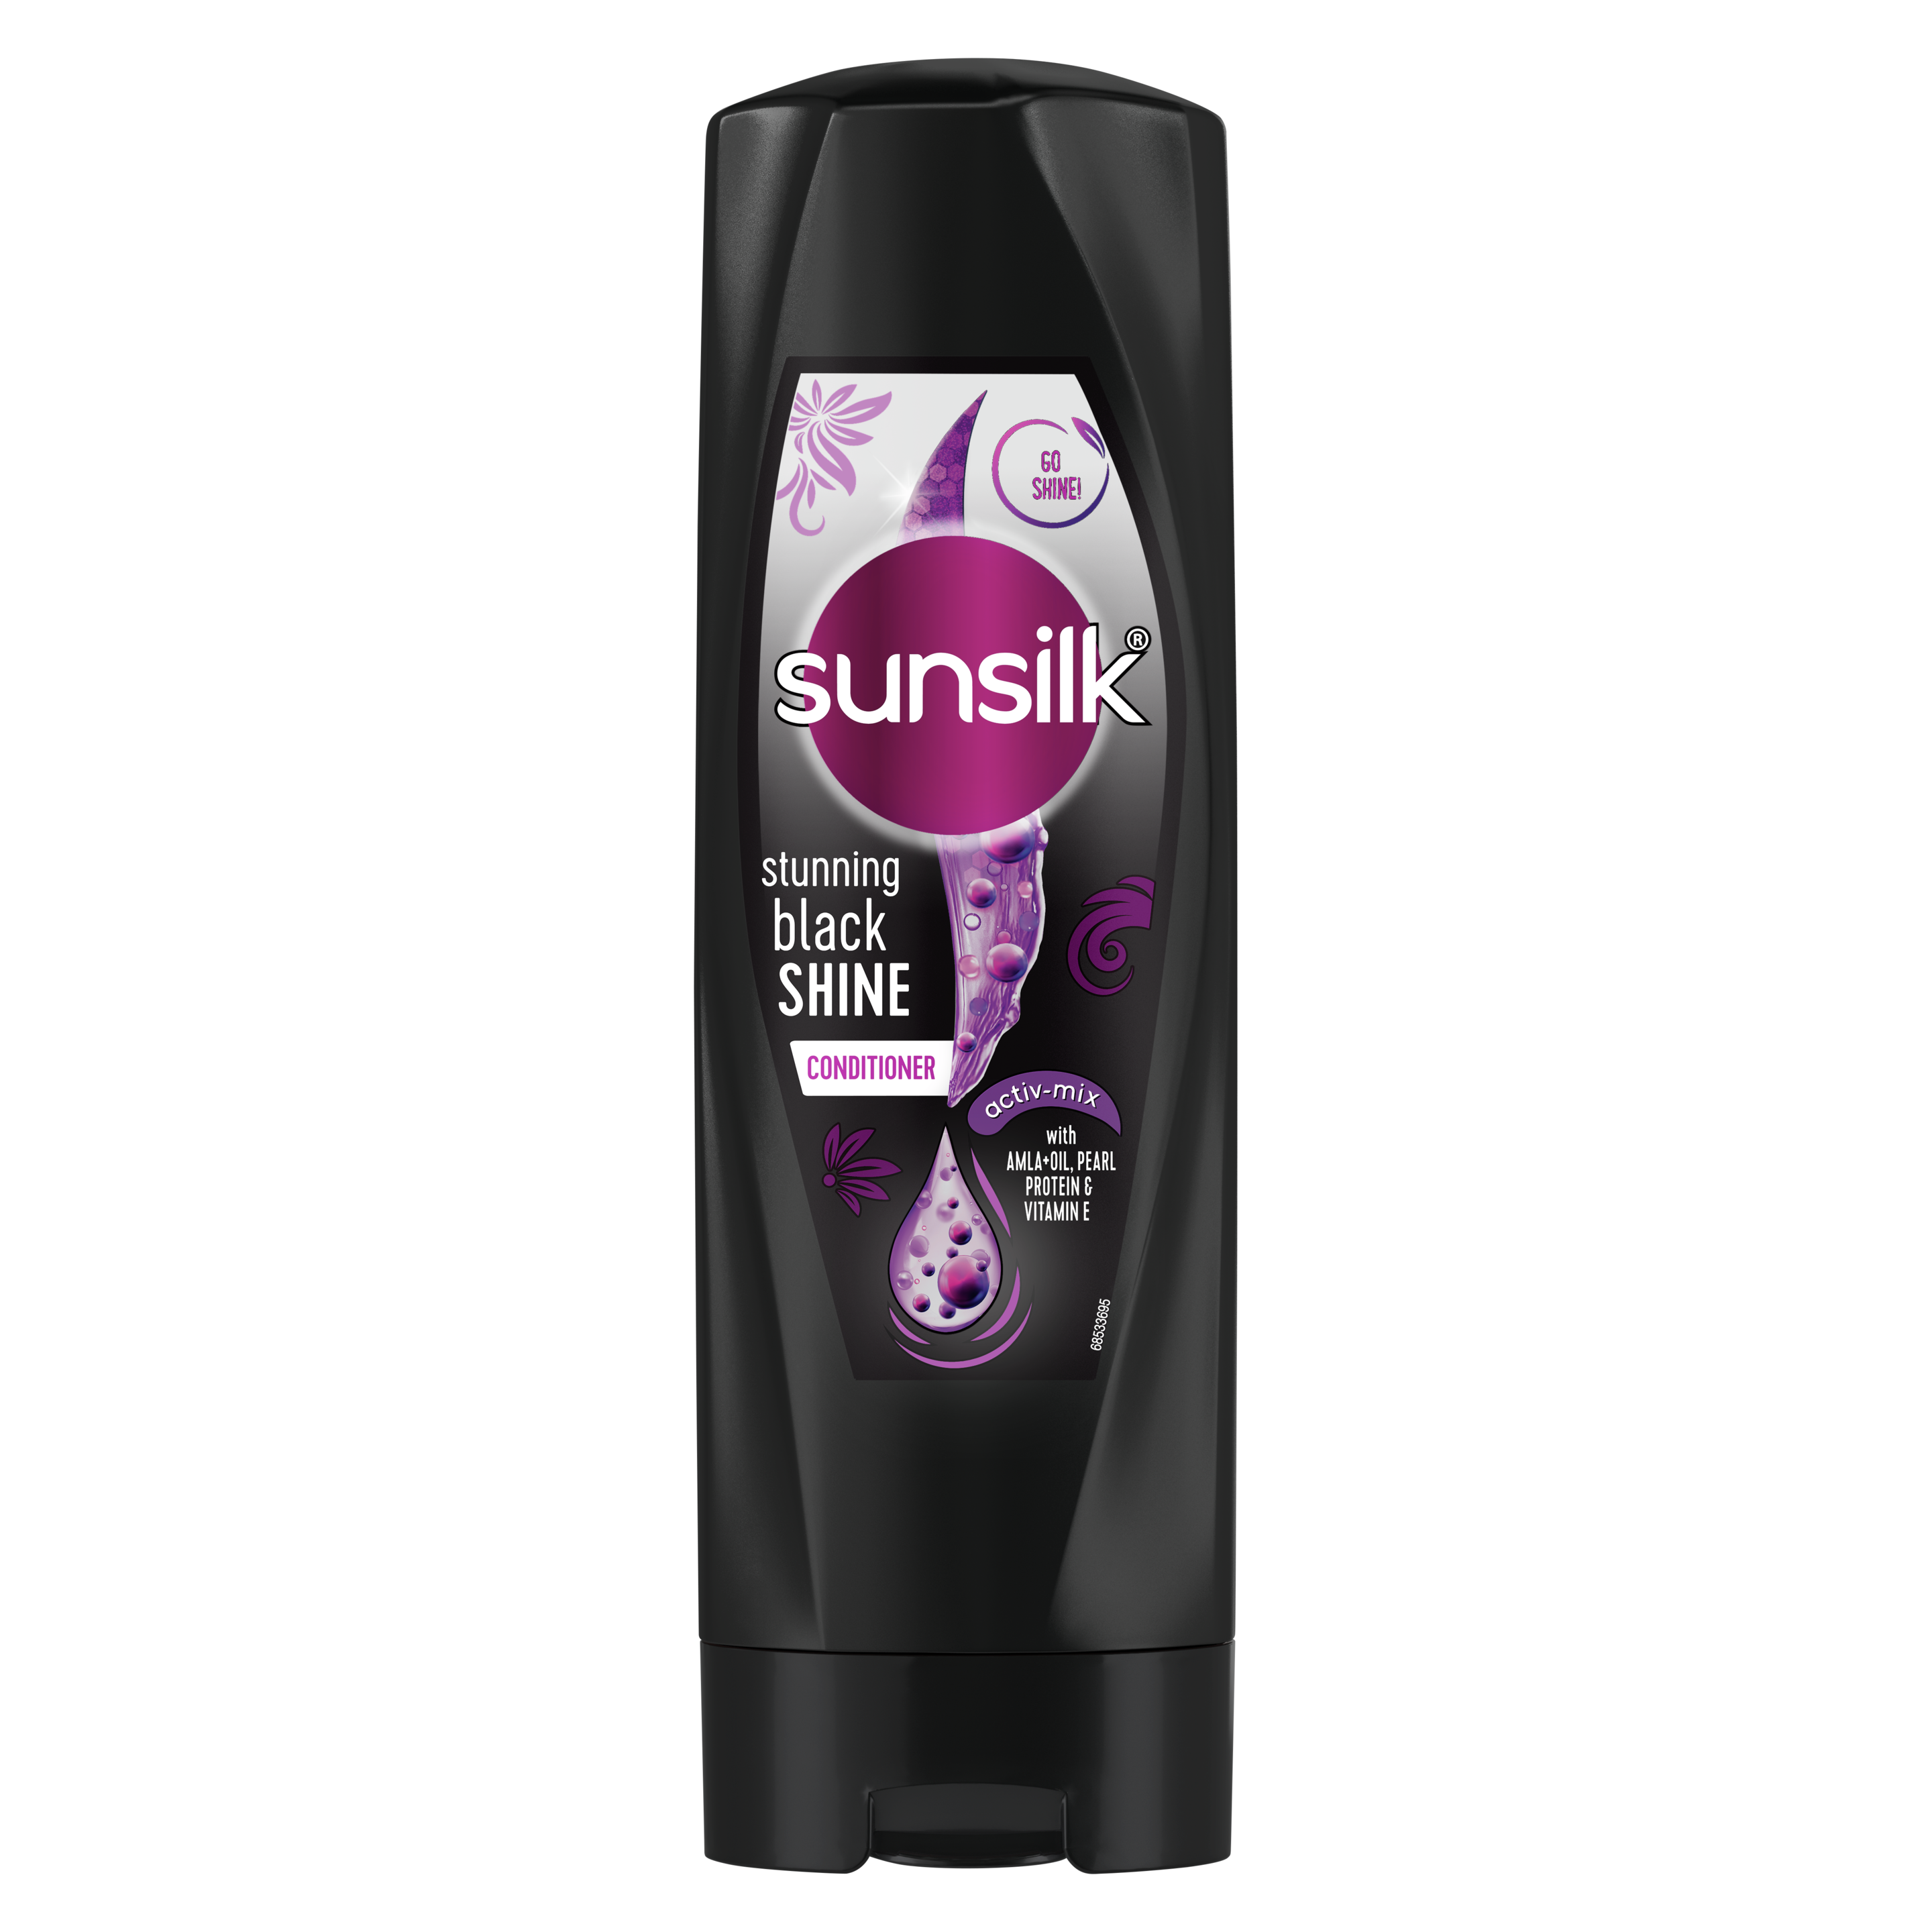 Sunsilk Stunning Black Shine Conditioner